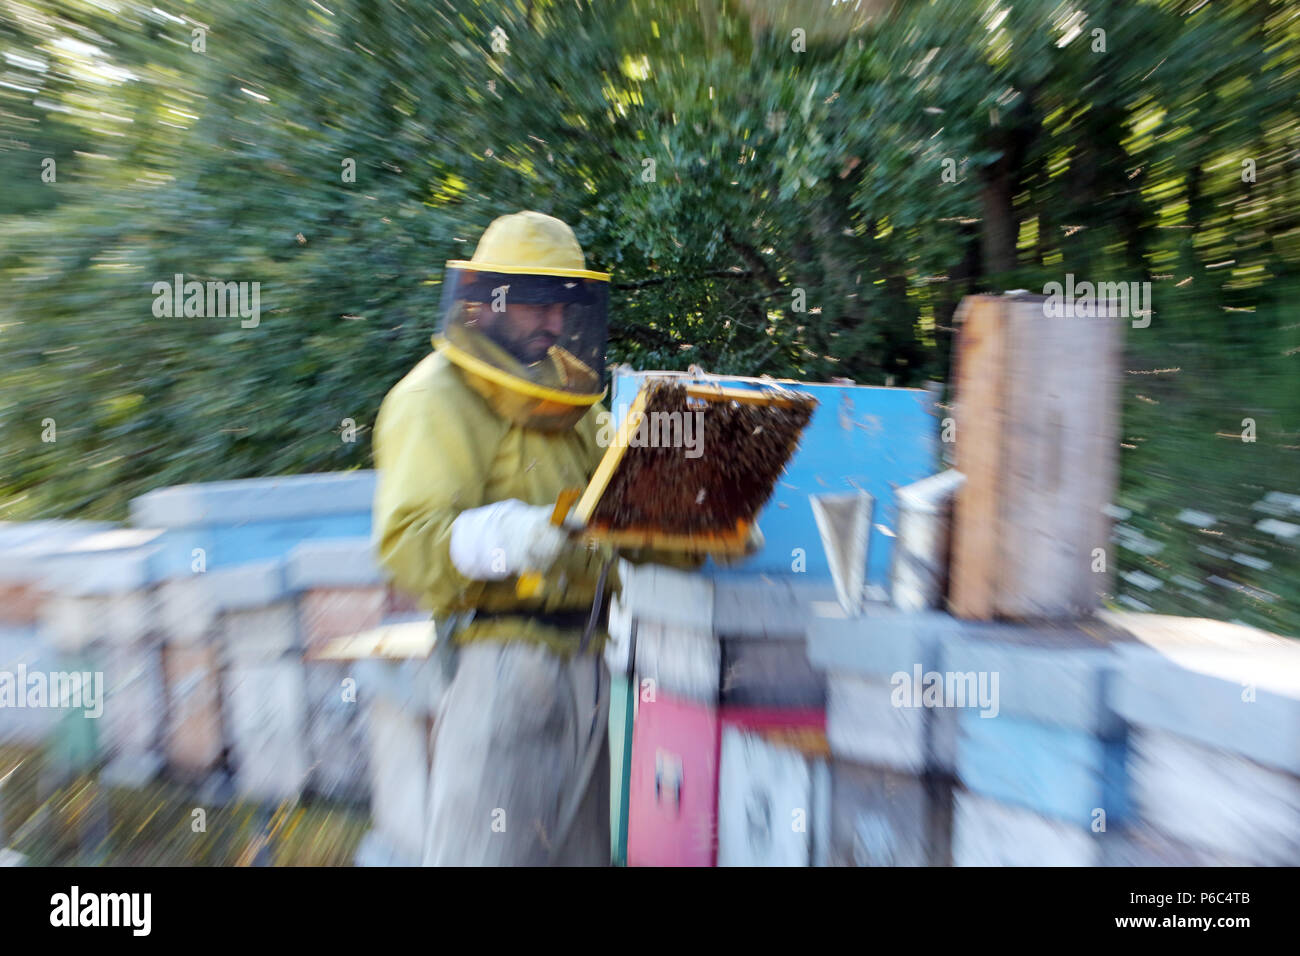 Castel Girogio, Italia, apicultor profesional inspecciona un panal de miel Foto de stock